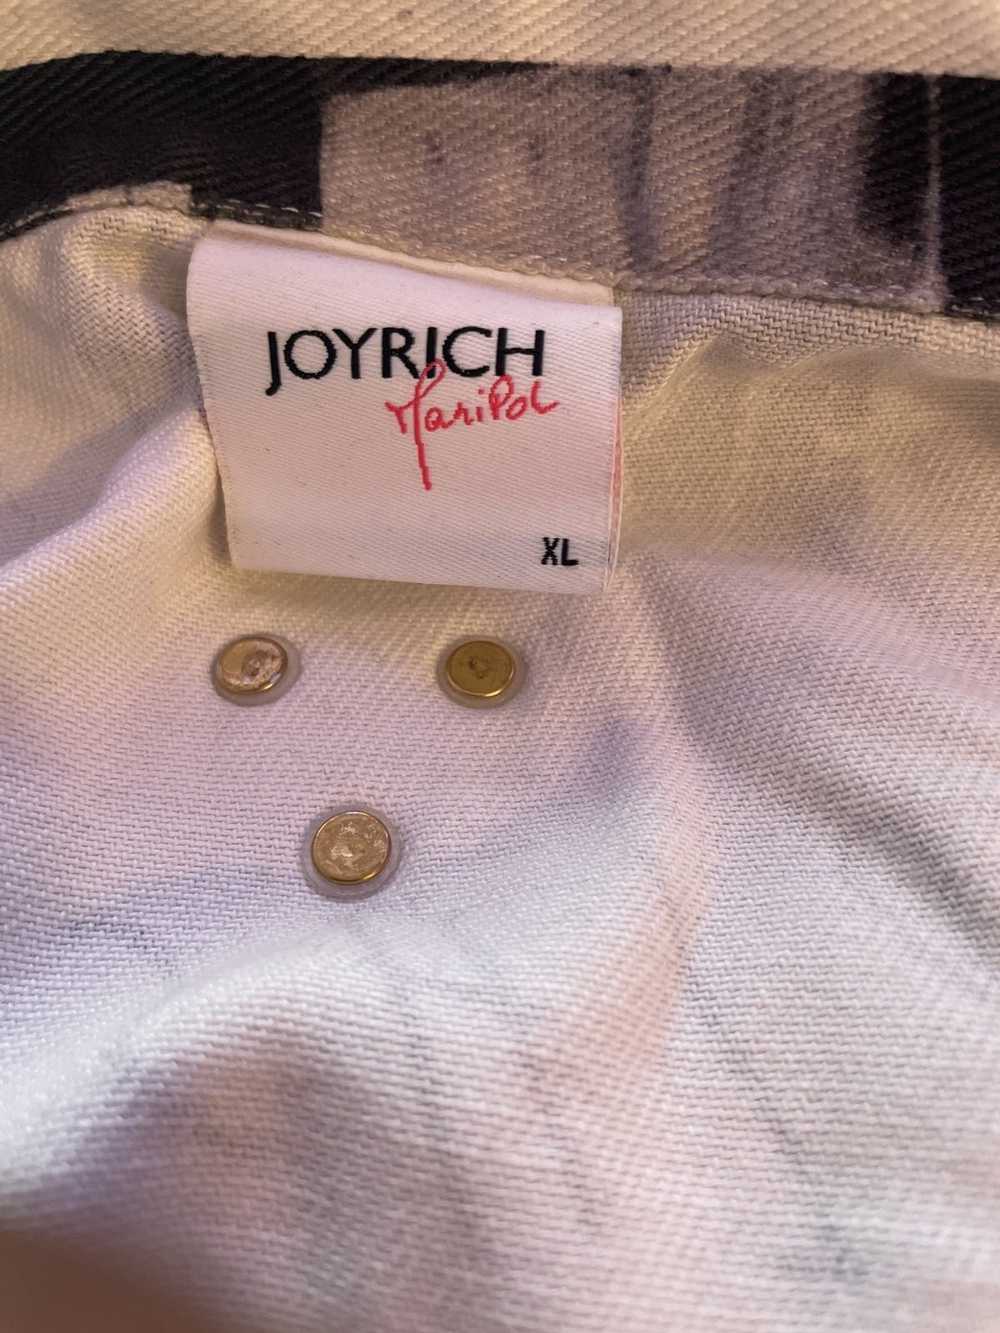 Joyrich Joyrich Maripol Collage City Jacket - image 4